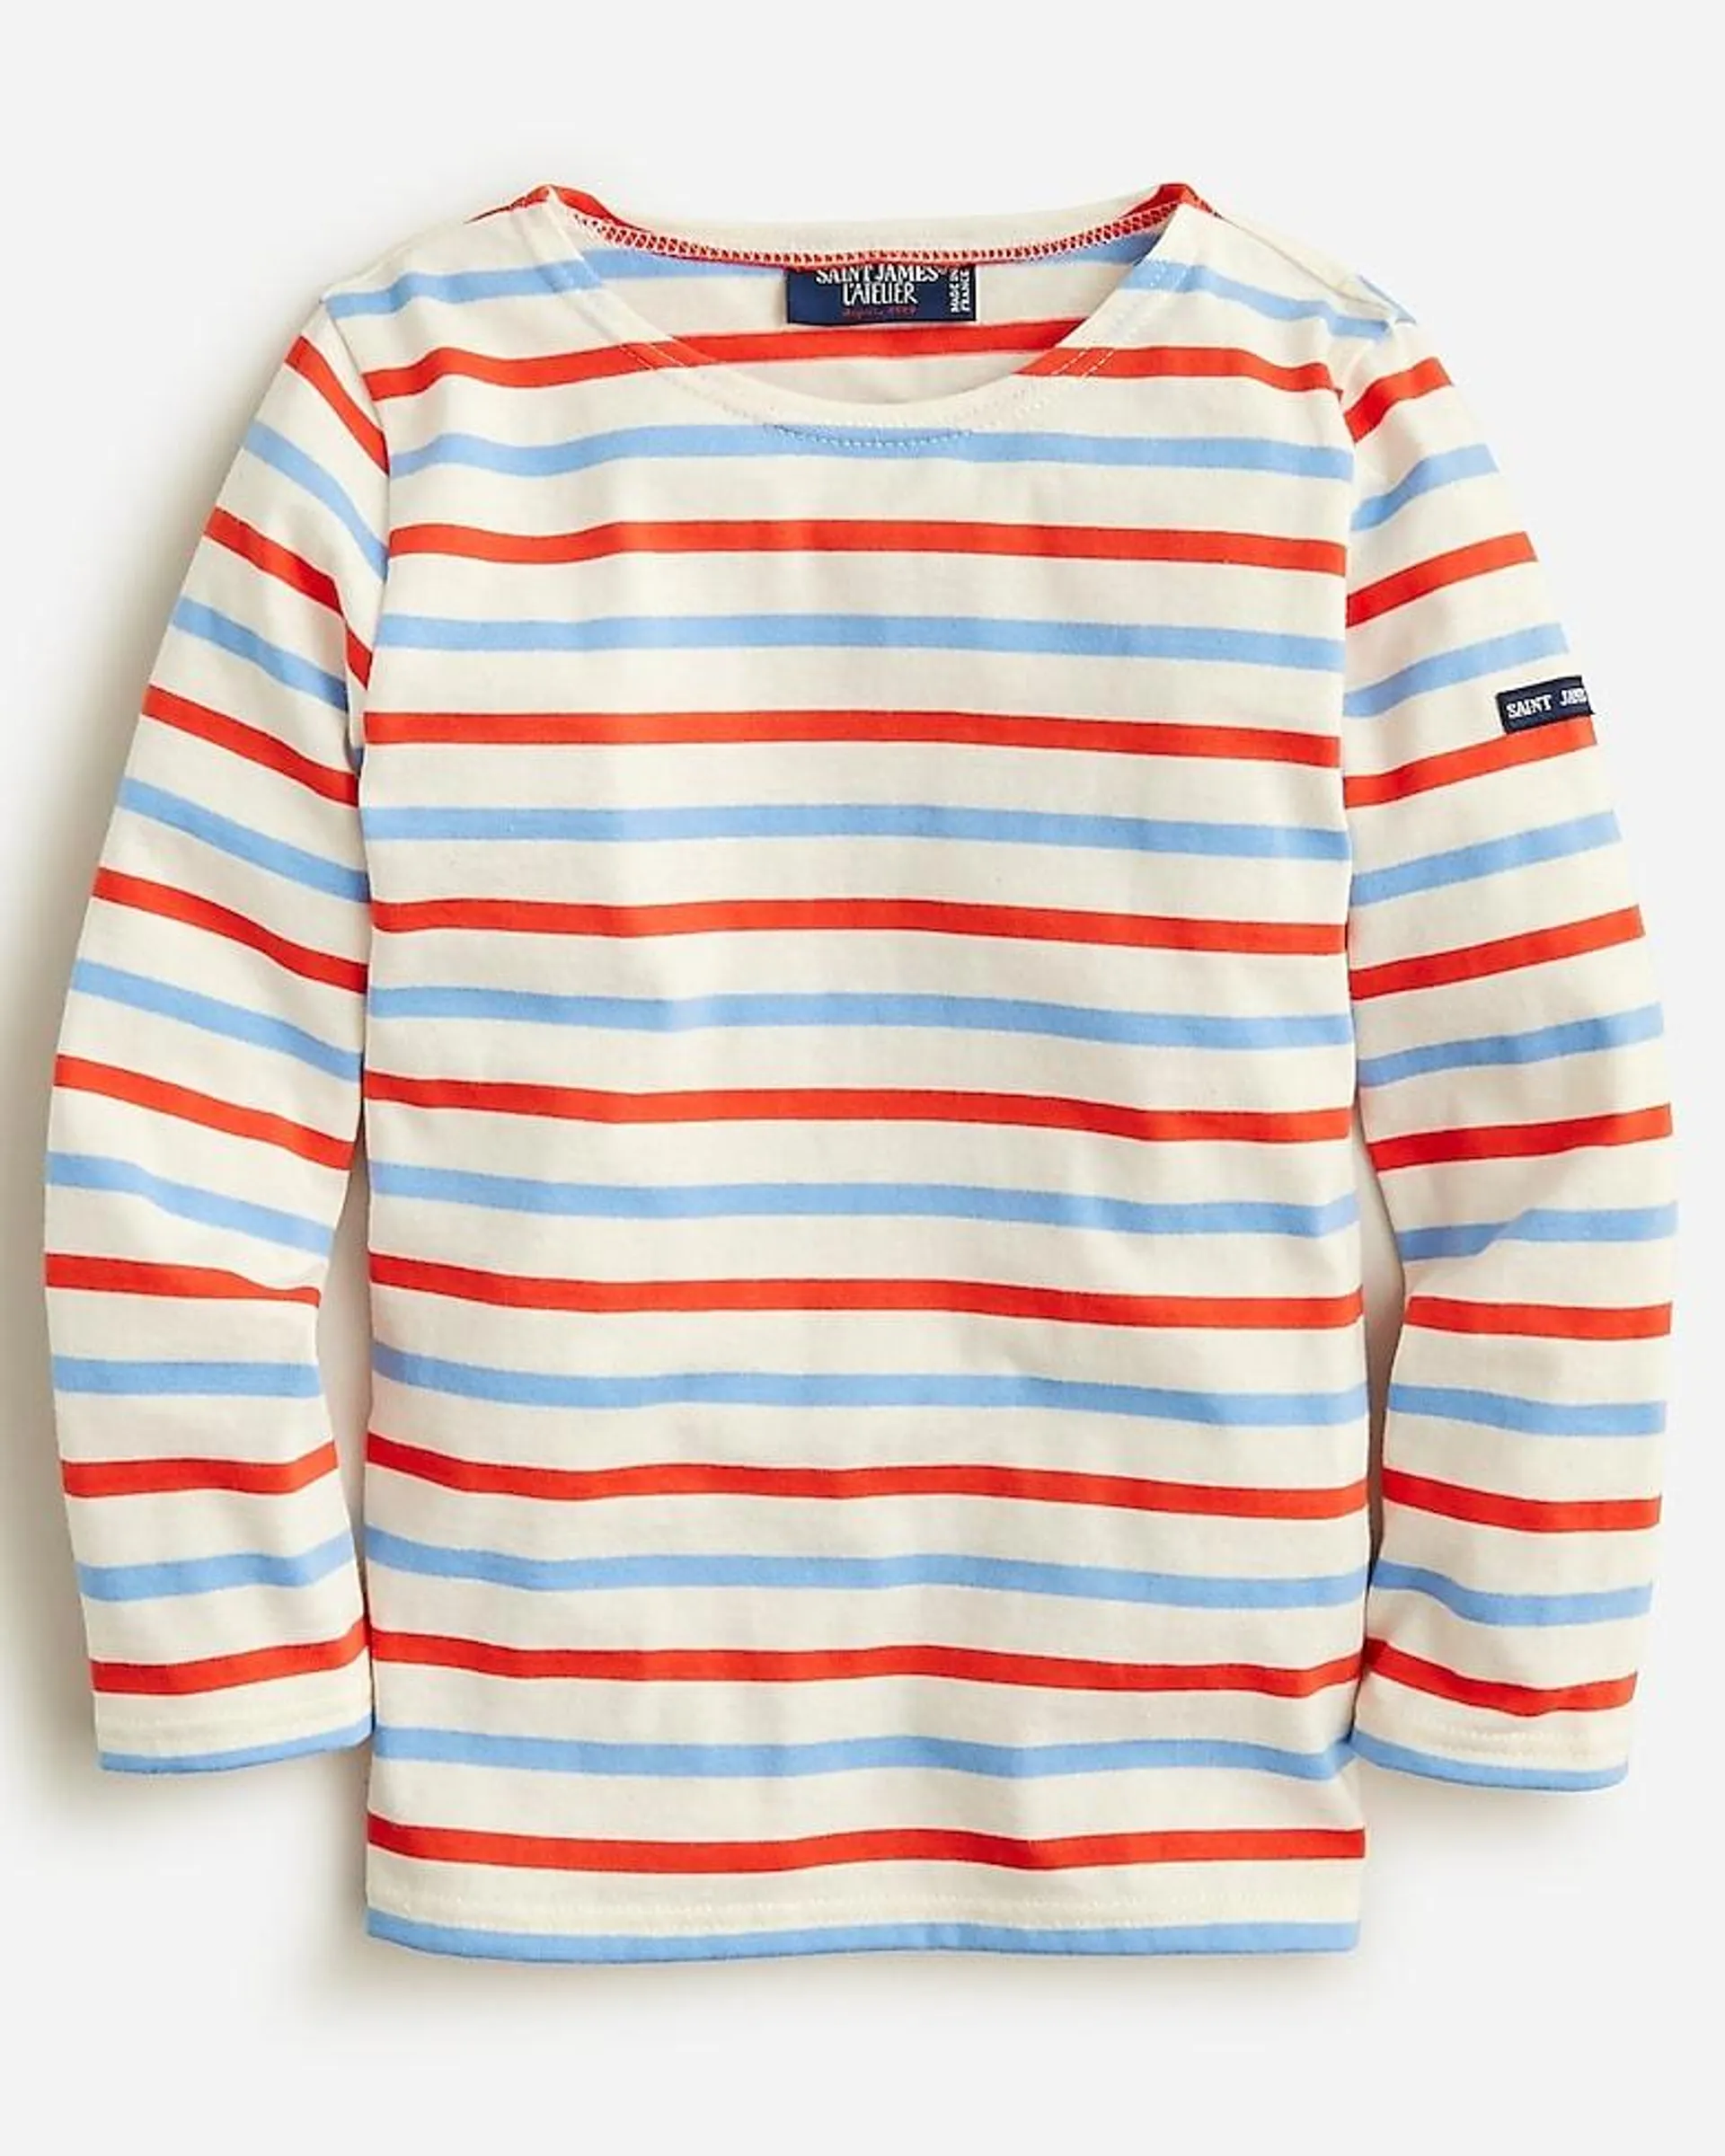 Saint James® X crewcuts long-sleeve striped T-shirt